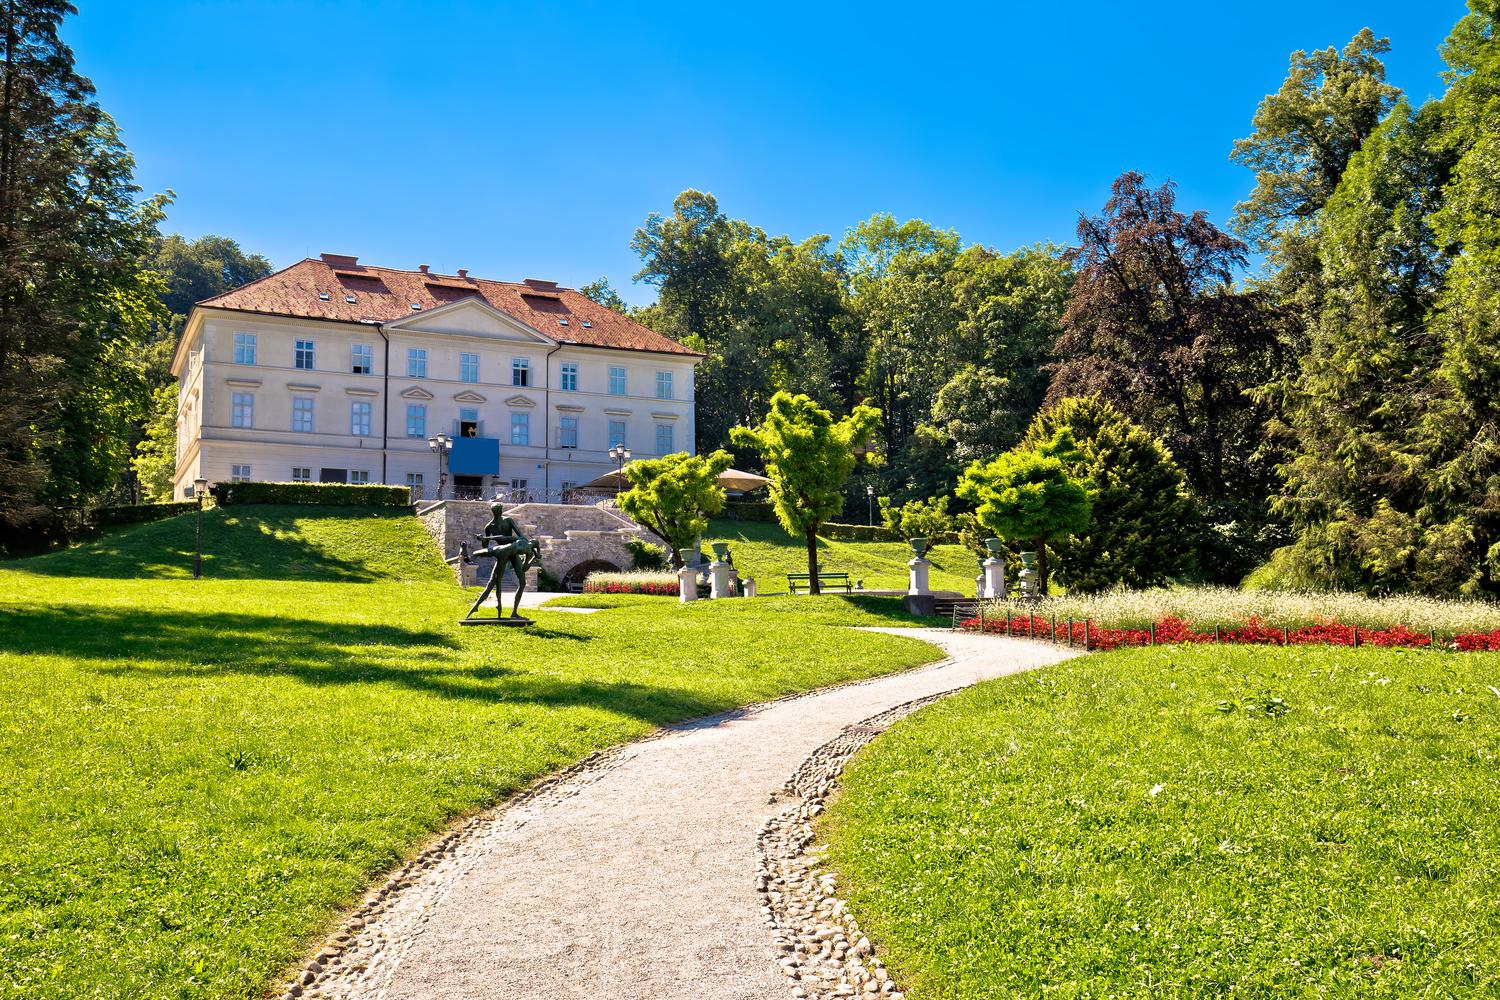 Tivolski grad v parku Tivoli v Ljubljani